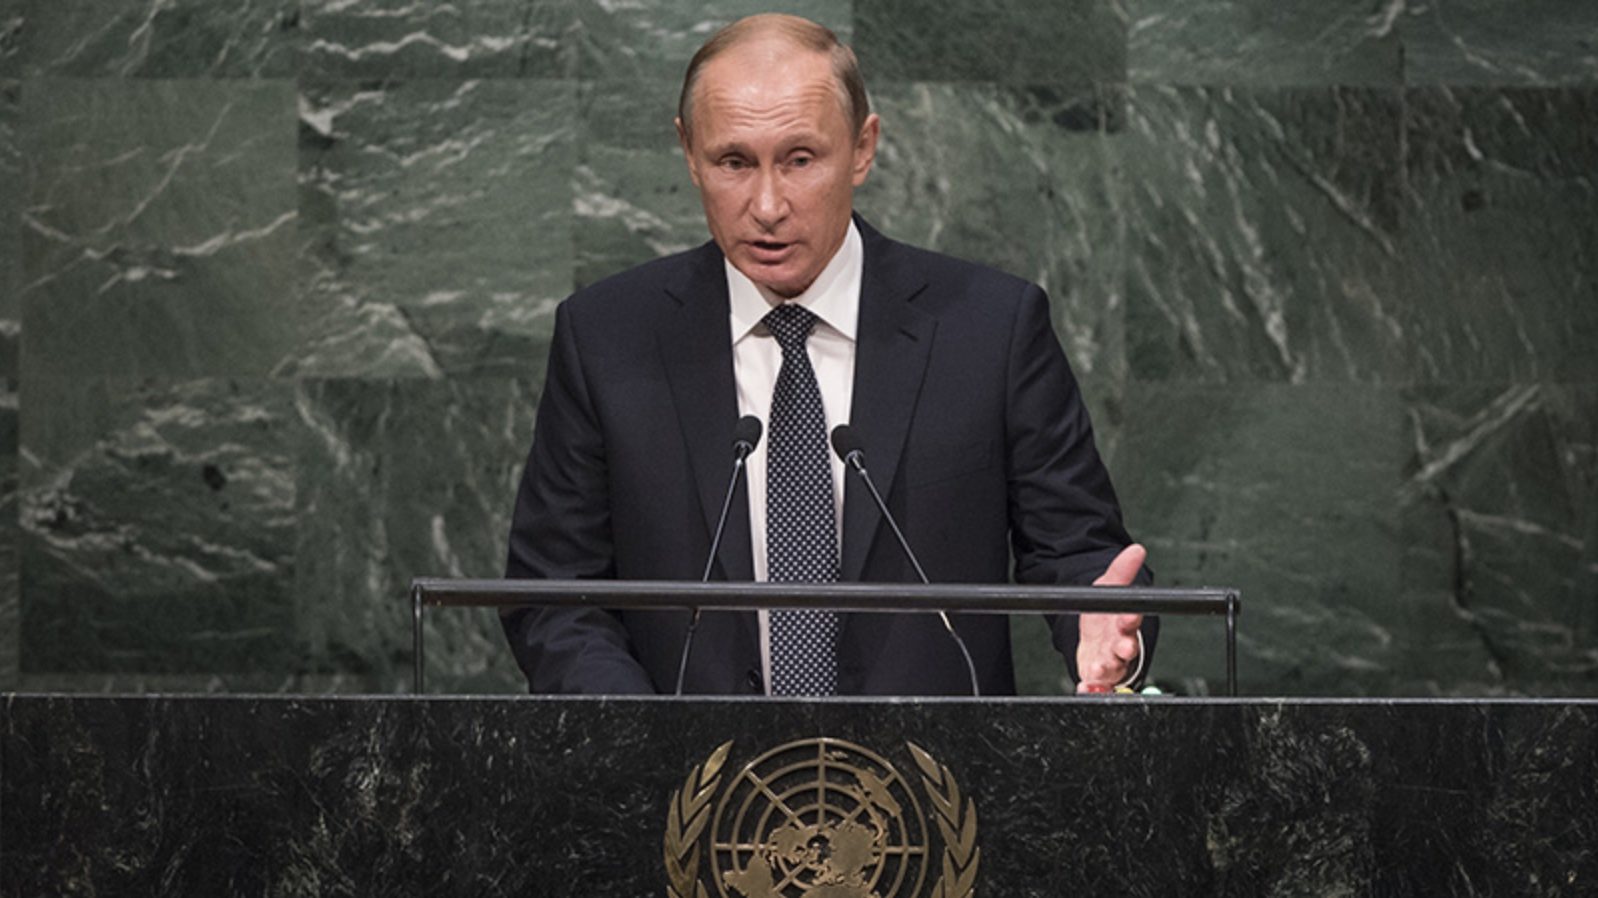 Putin addressing the UN